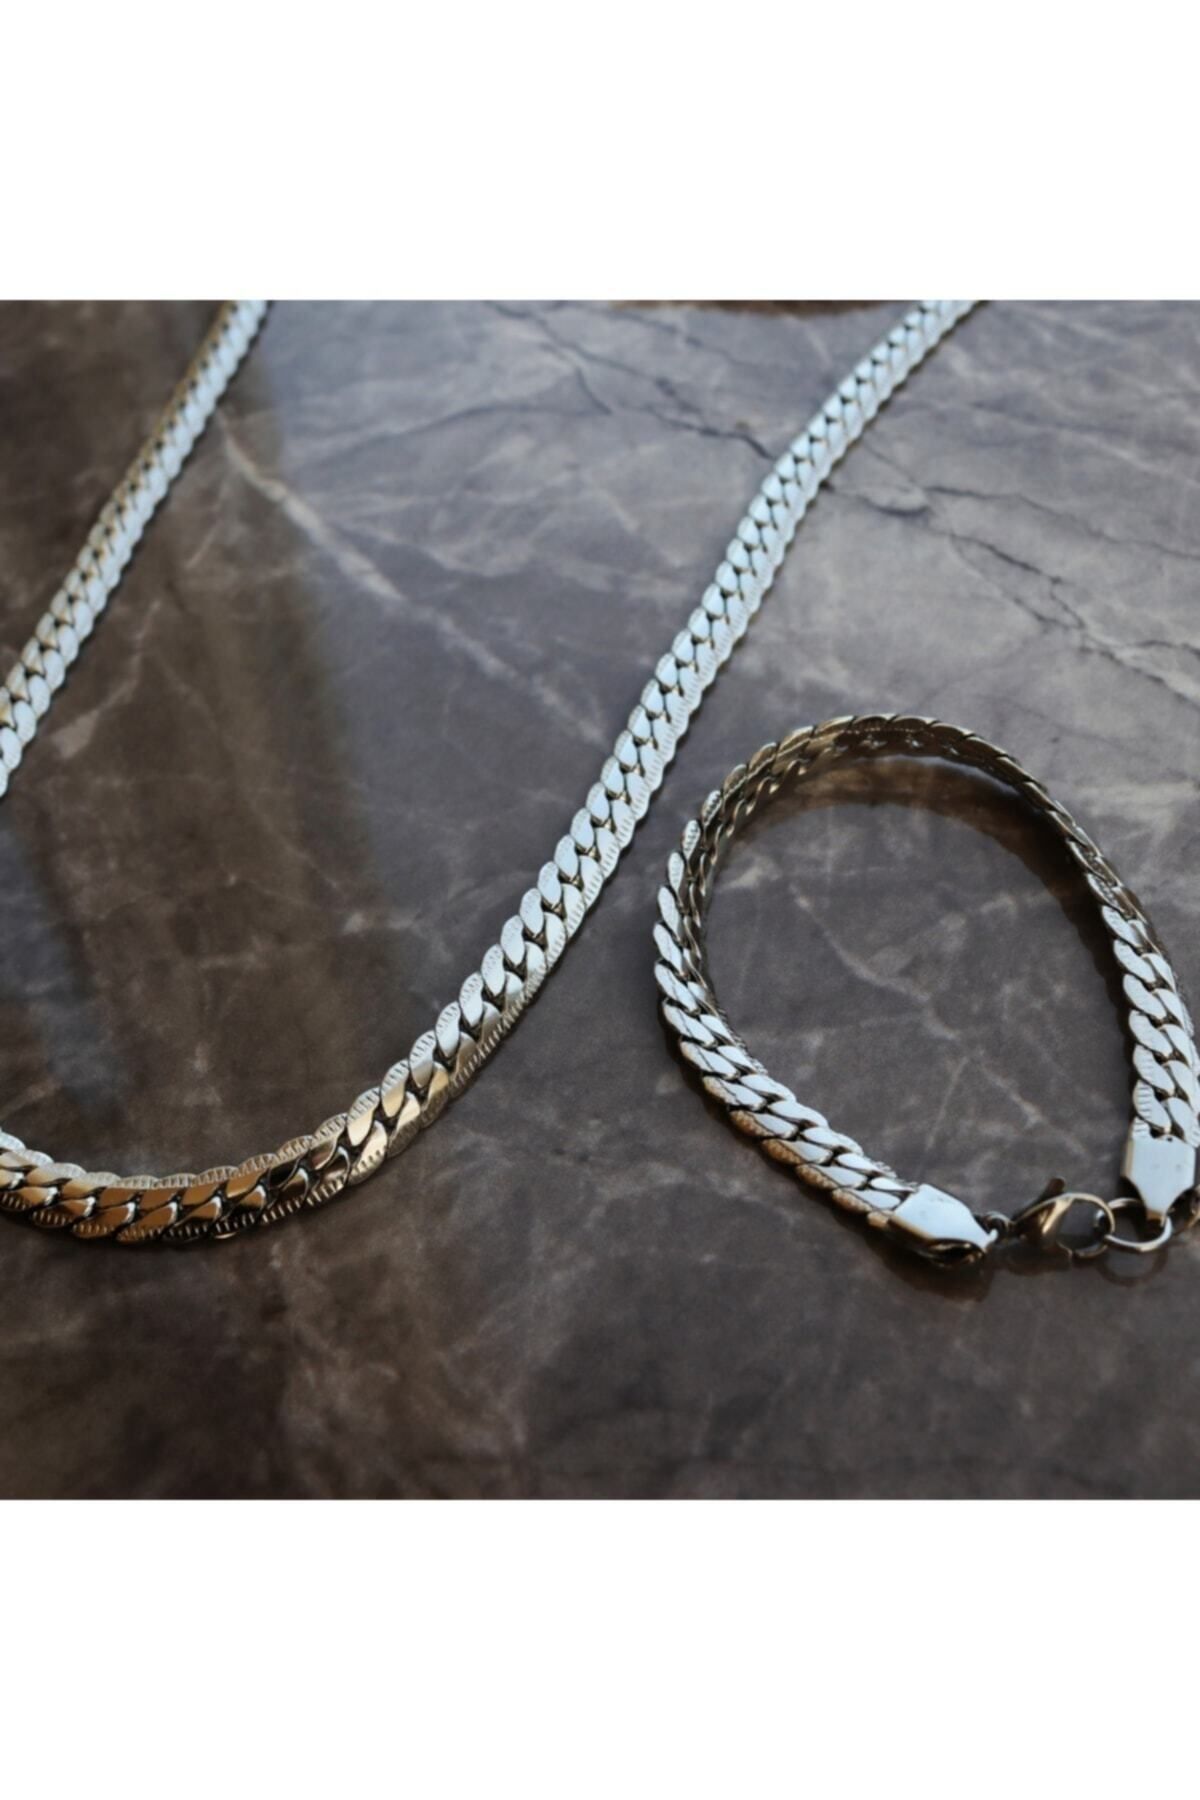 Combined Mens Bracelet İn Dark Blue-Brown Steel And Leather With Double  Straw Design Bracelet Tesbihane